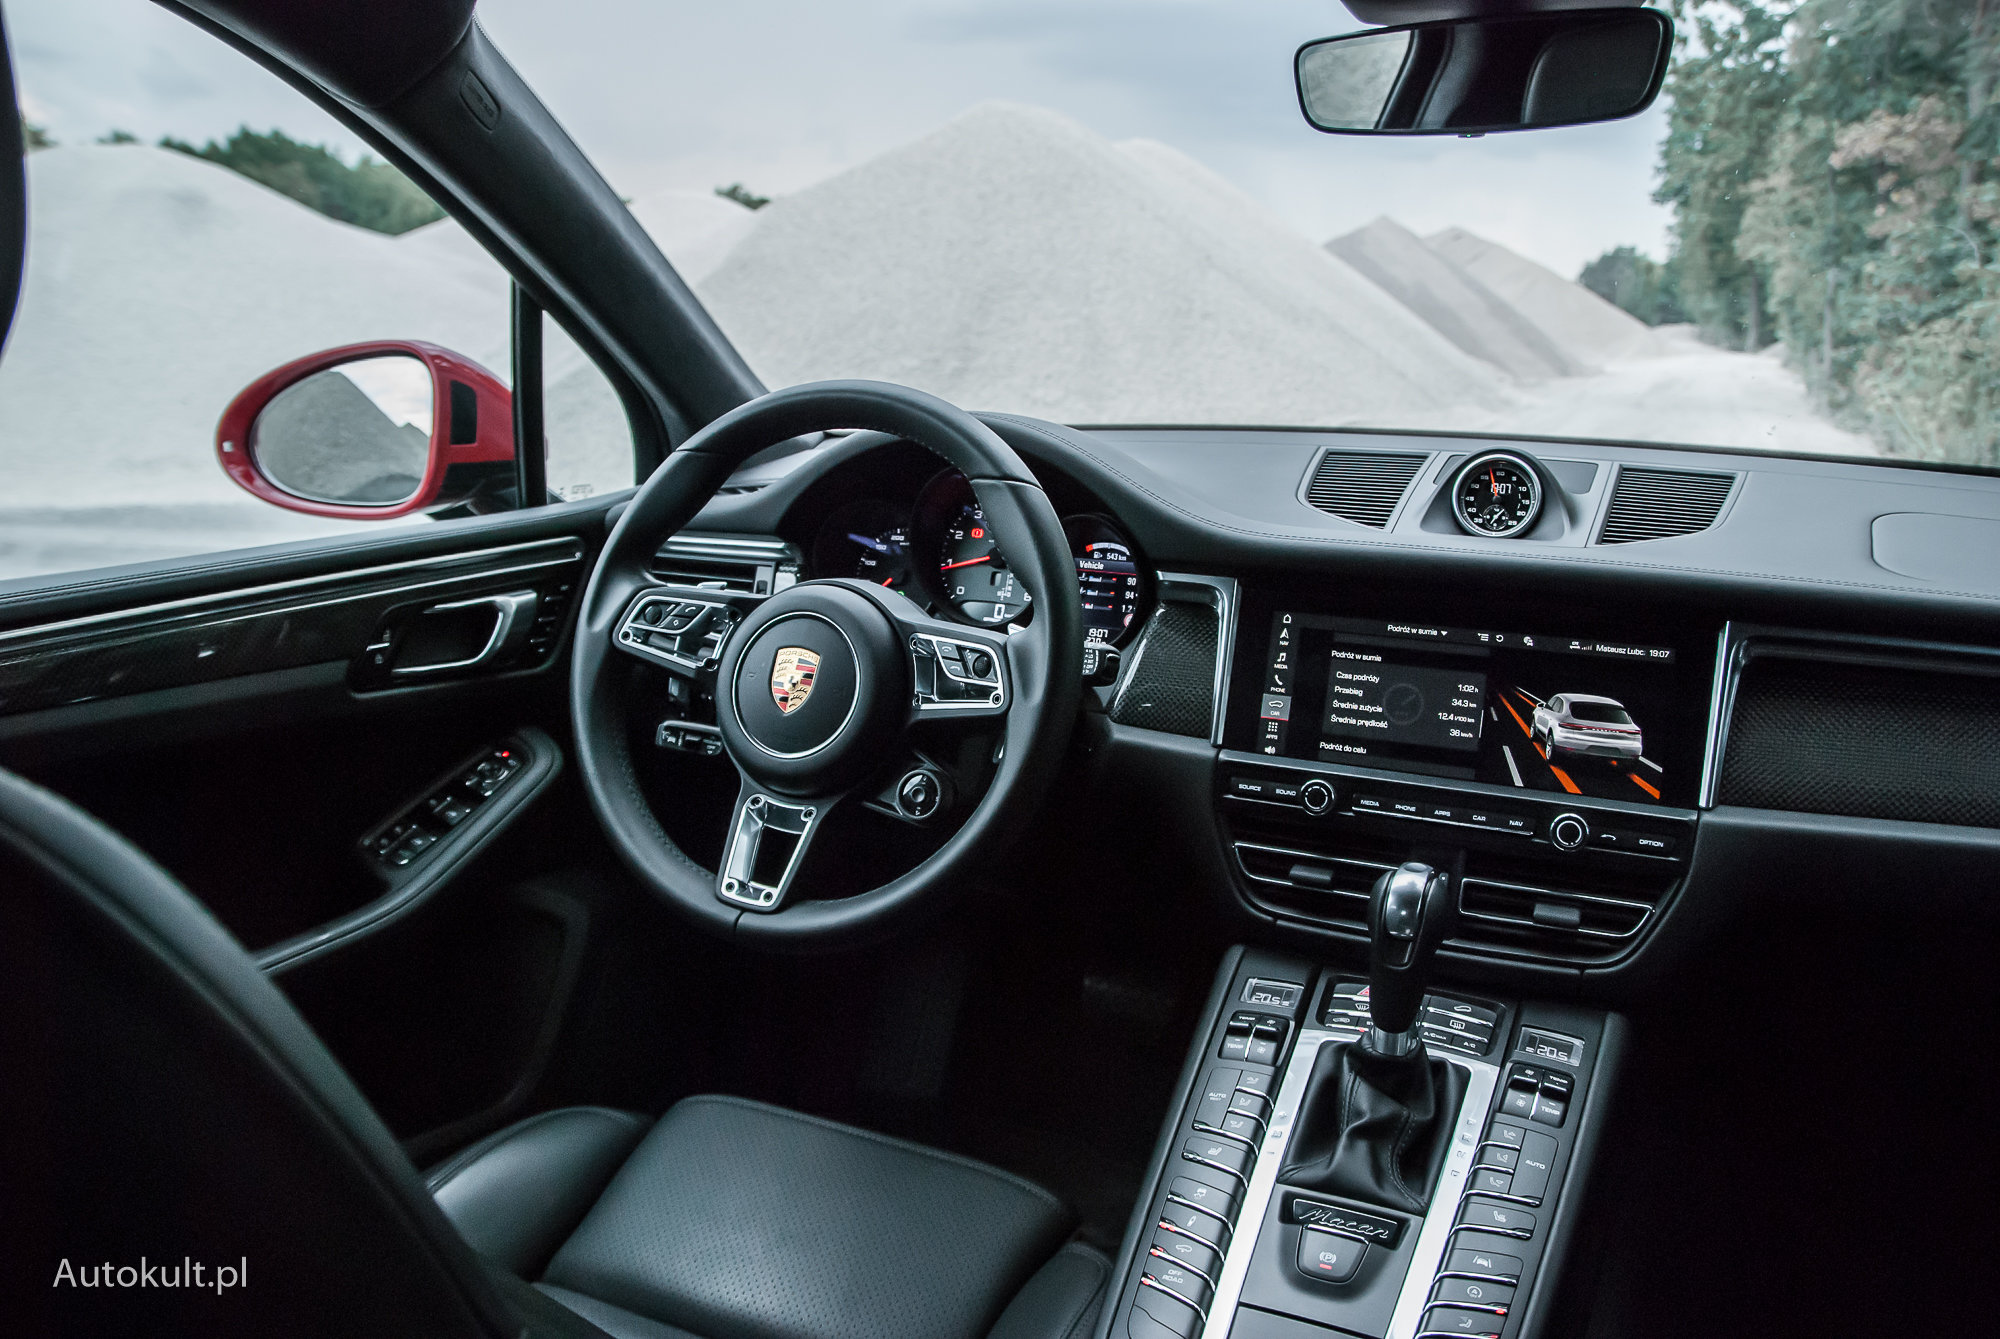 Porsche Macan S po liftingu (2019) test, opinia, dane